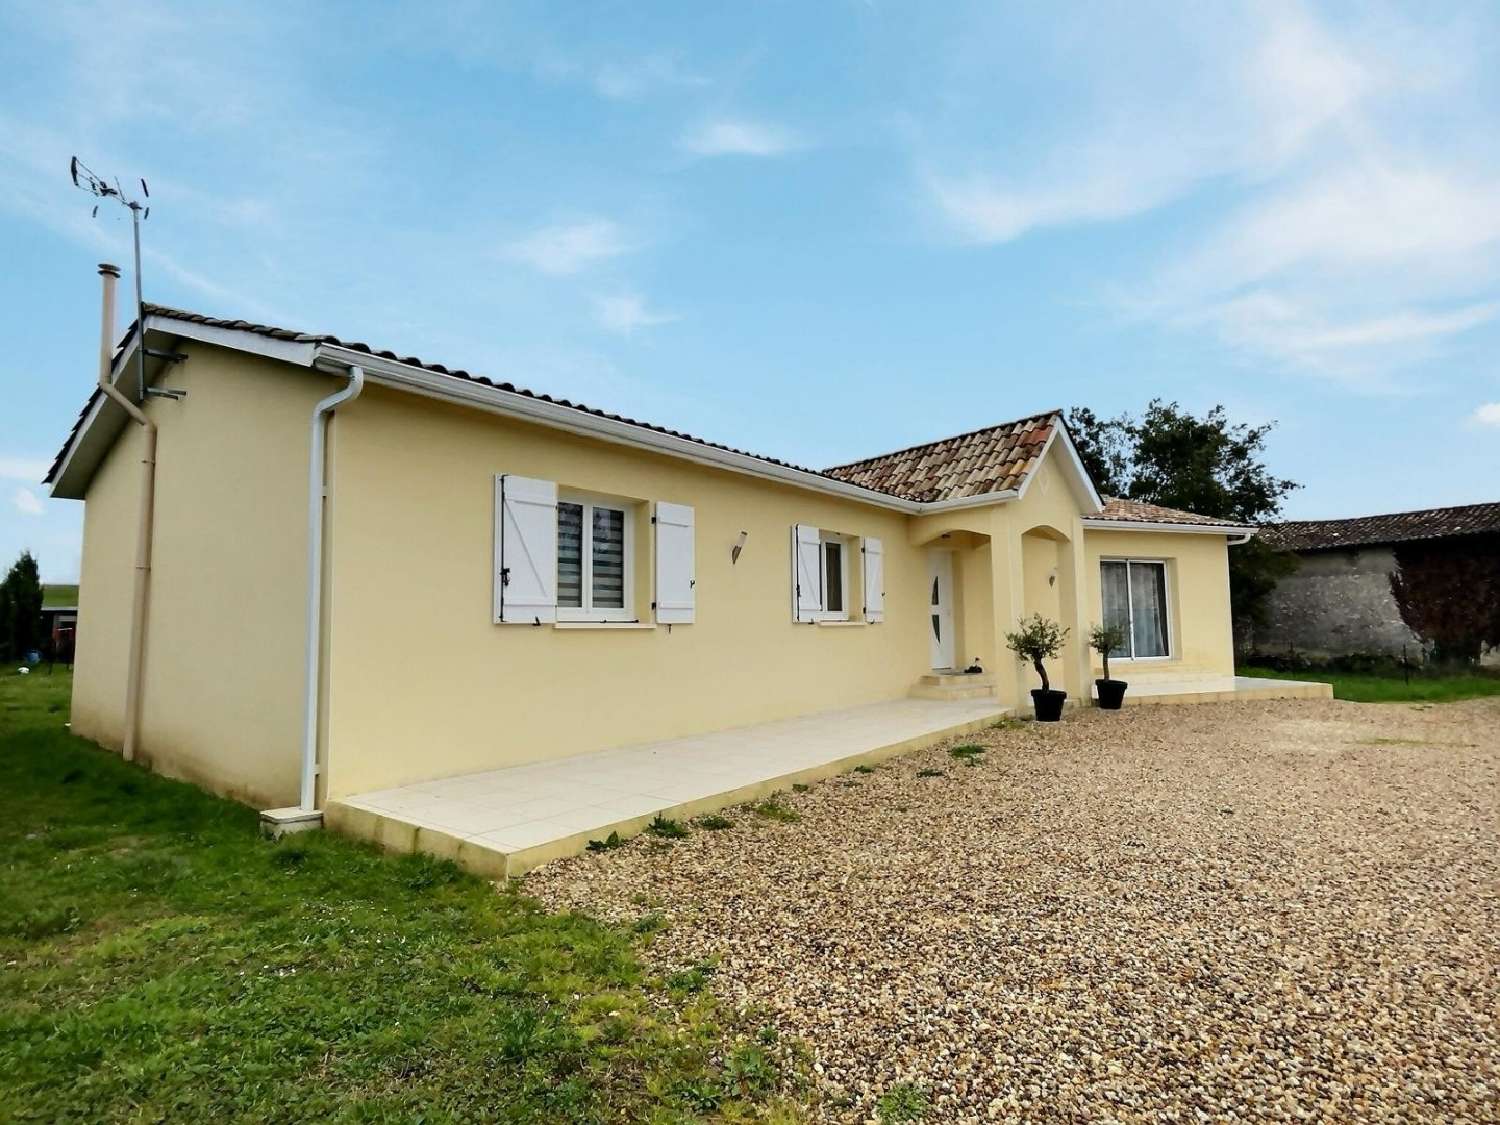  à vendre maison Sainte-Foy-la-Grande Gironde 1